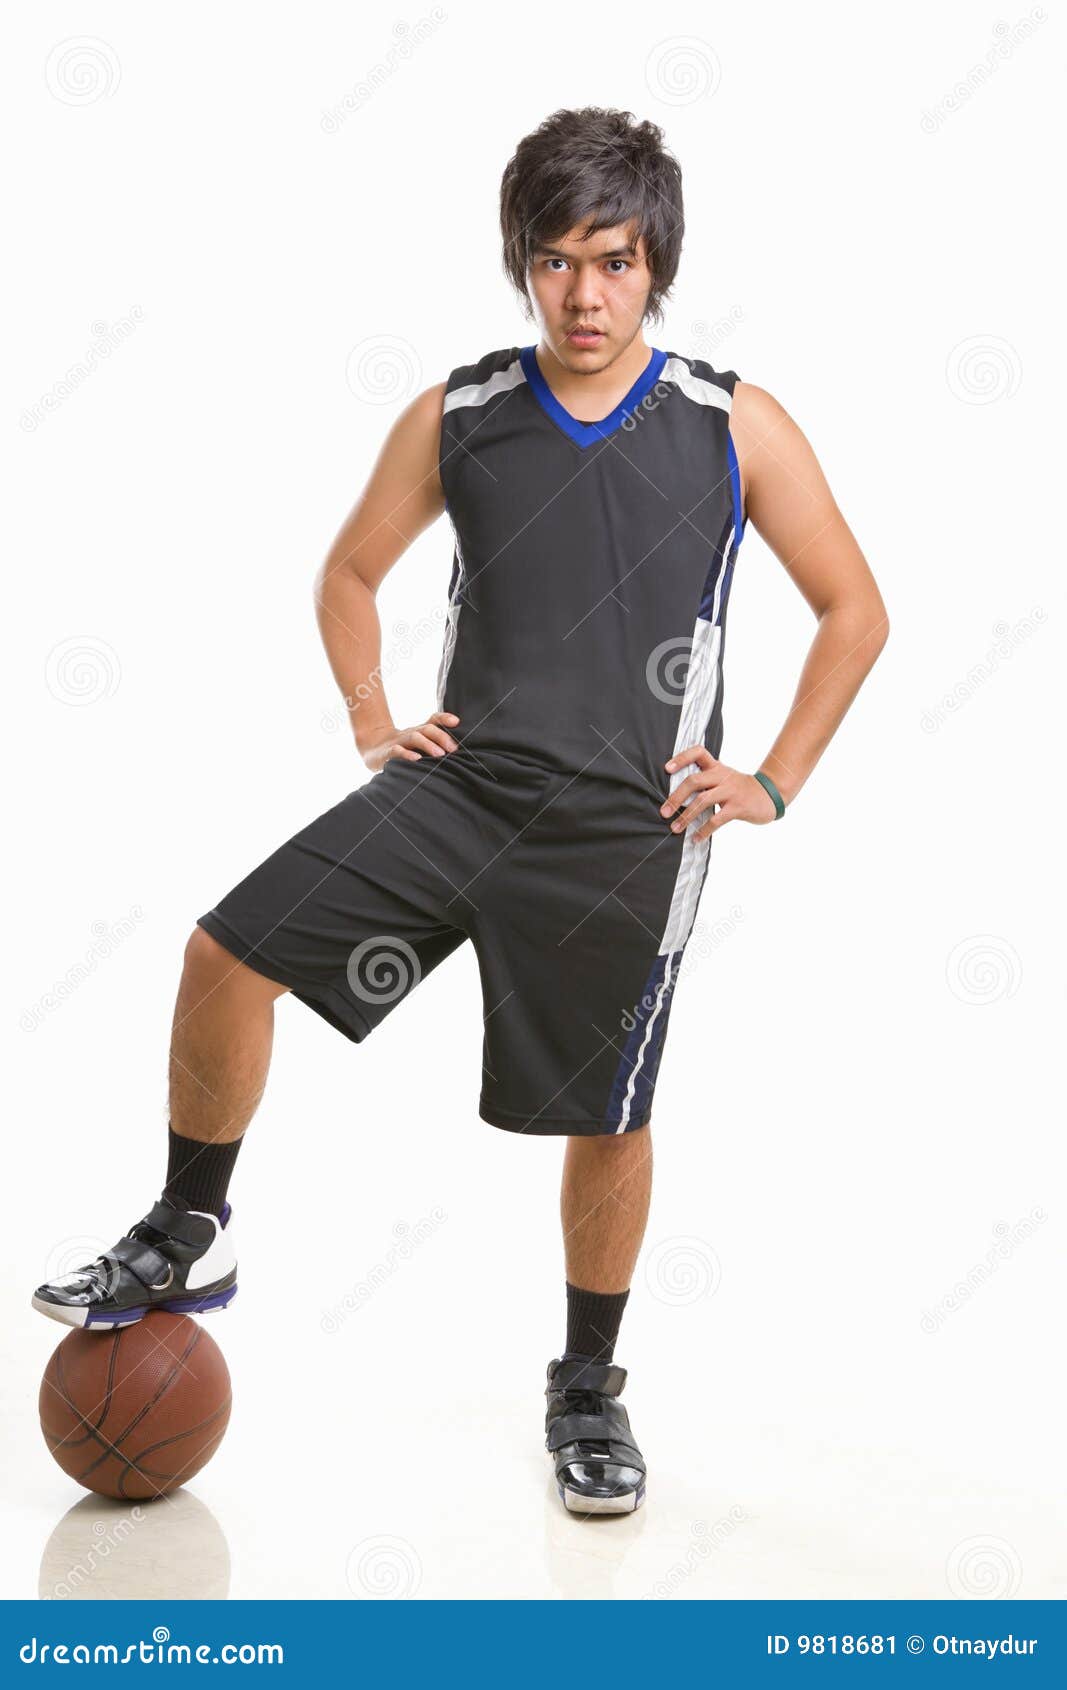 Basketball Player Free Throw Pose Stock Photo 83992912 | Shutterstock